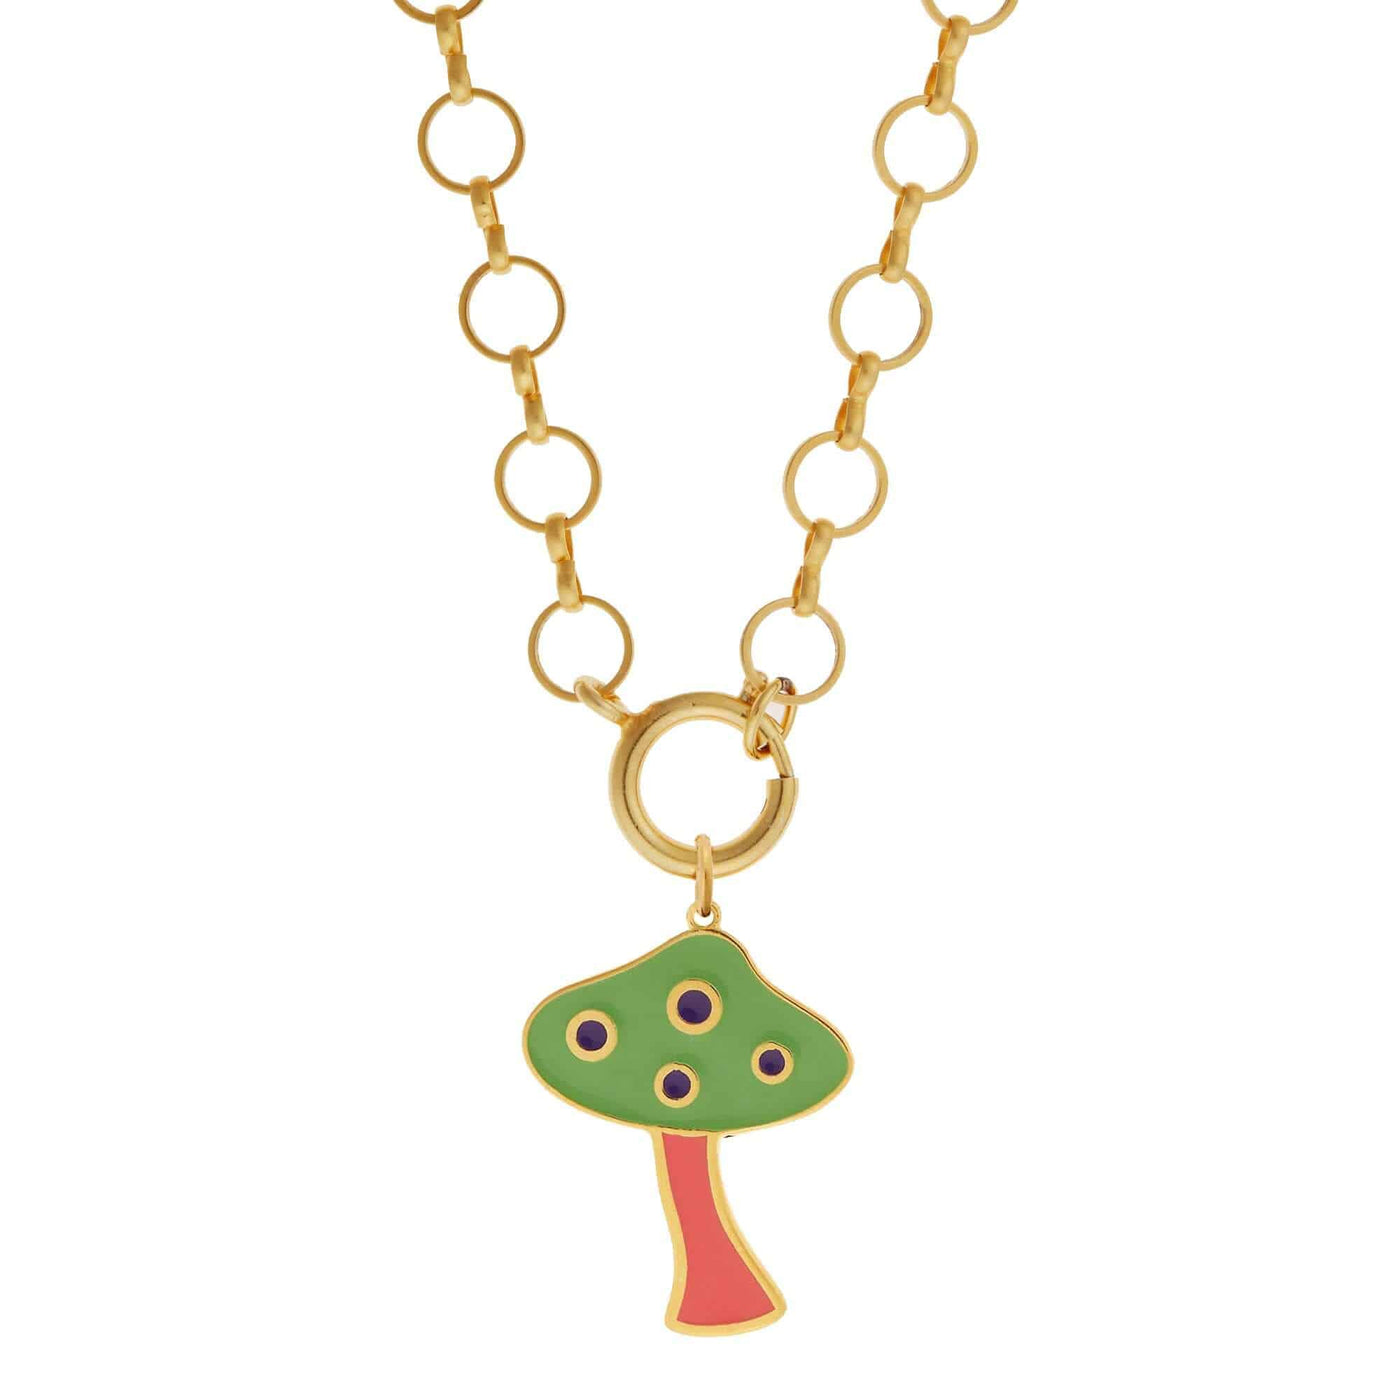 Big Green Mushroom Necklace - Eye M Flower Power - Ileana Makri store